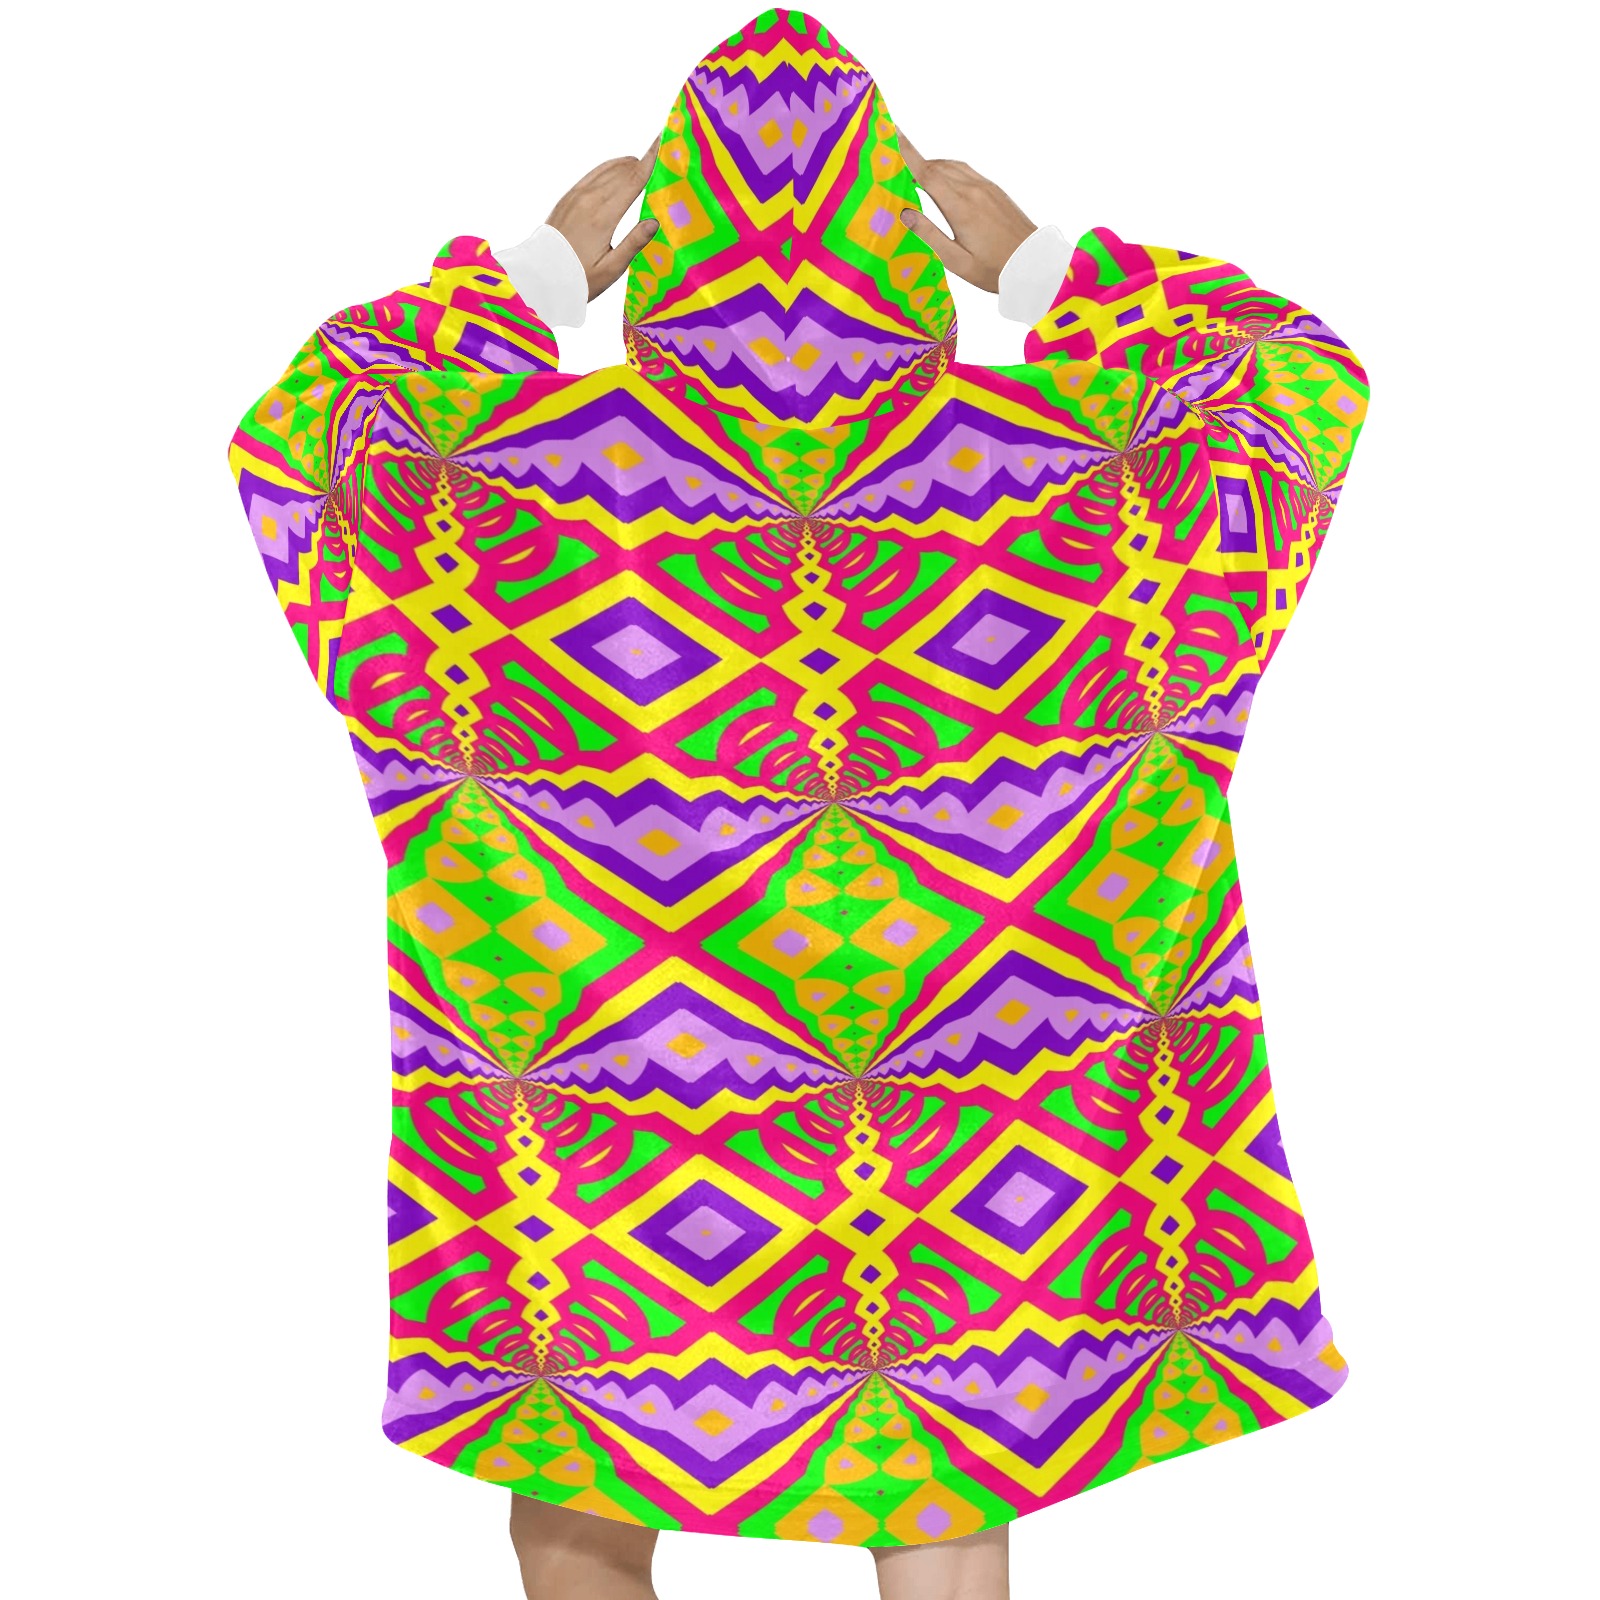 Fractoberry Fractal Pattern 000162WBH Blanket Hoodie for Women